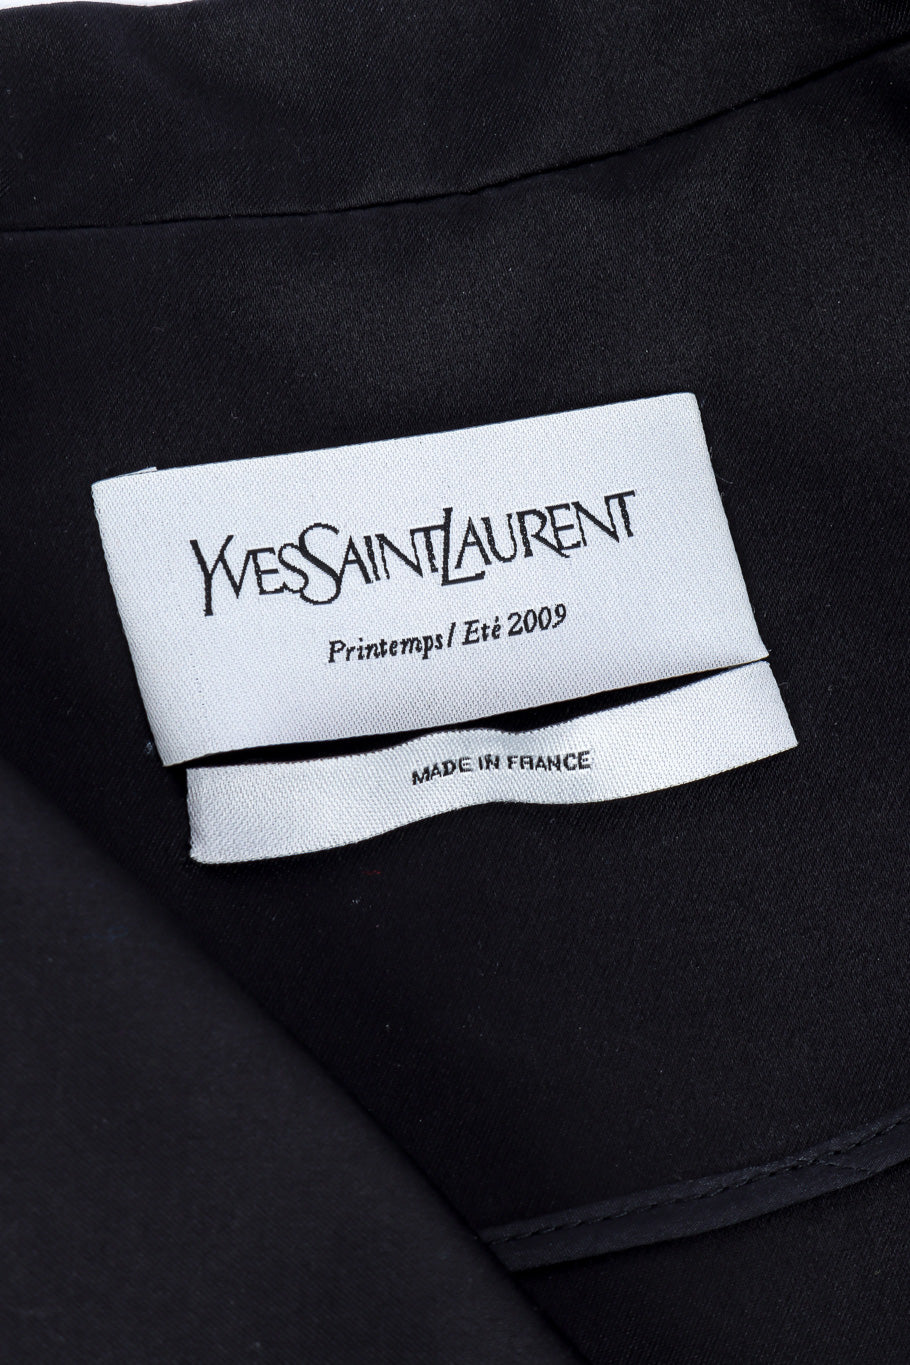 Grommet jacket by Yves Saint Laurent label  @recessla